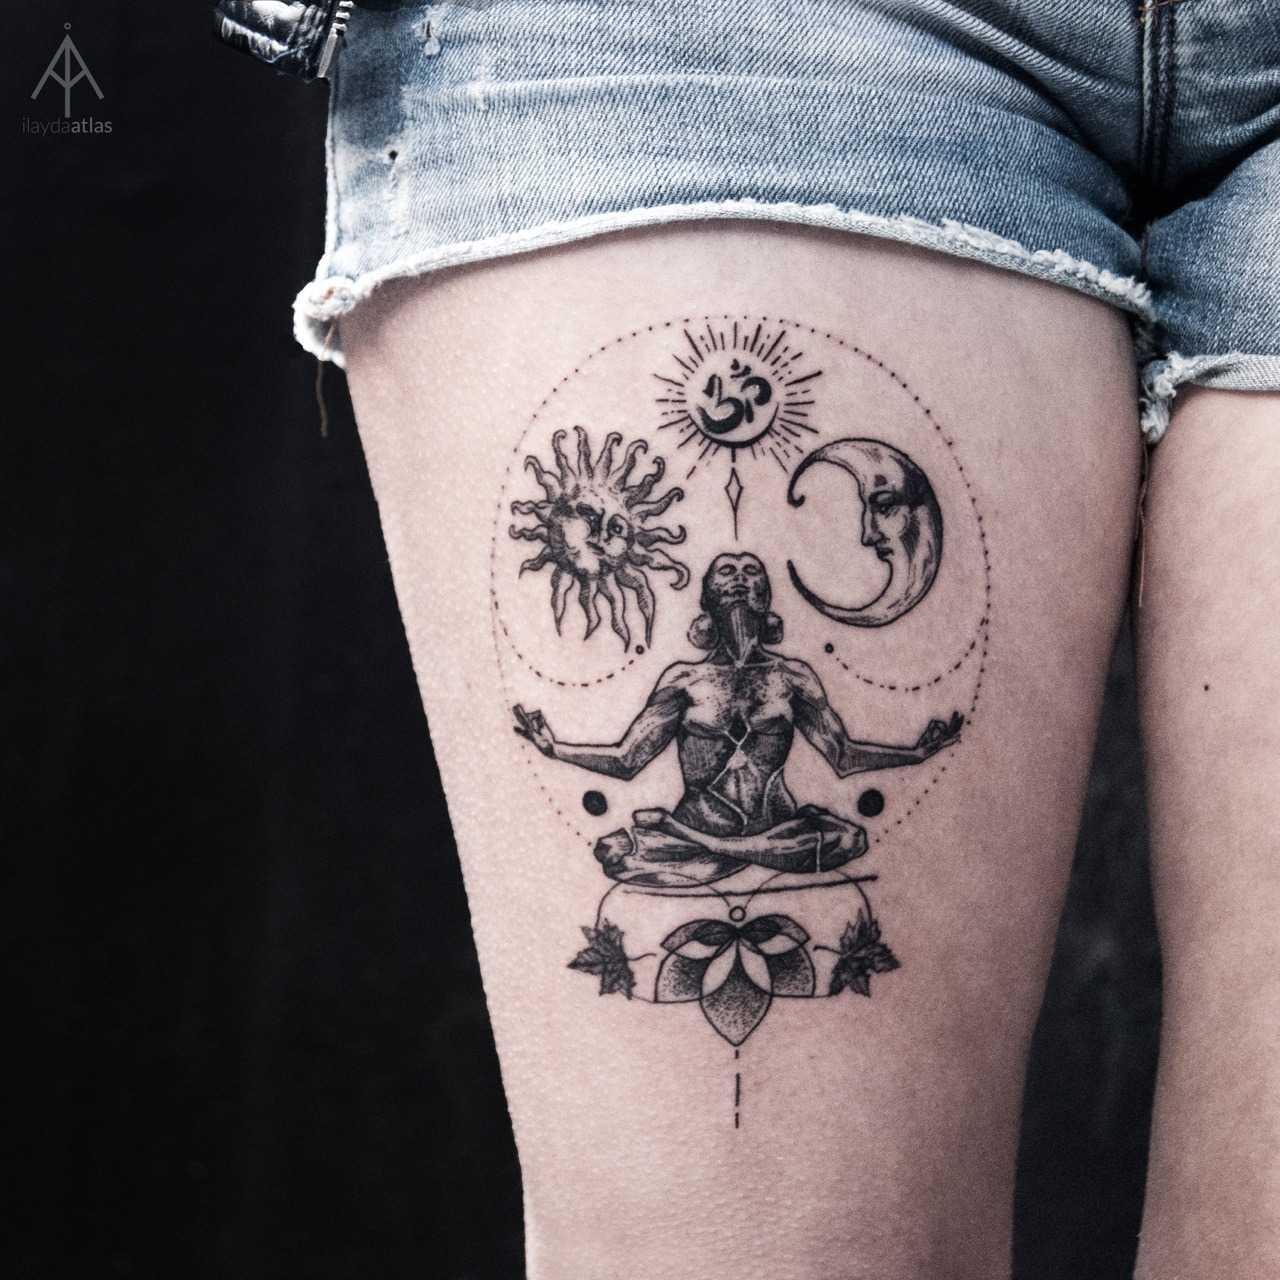 Spiritual tattoo by Ilayda Atlas